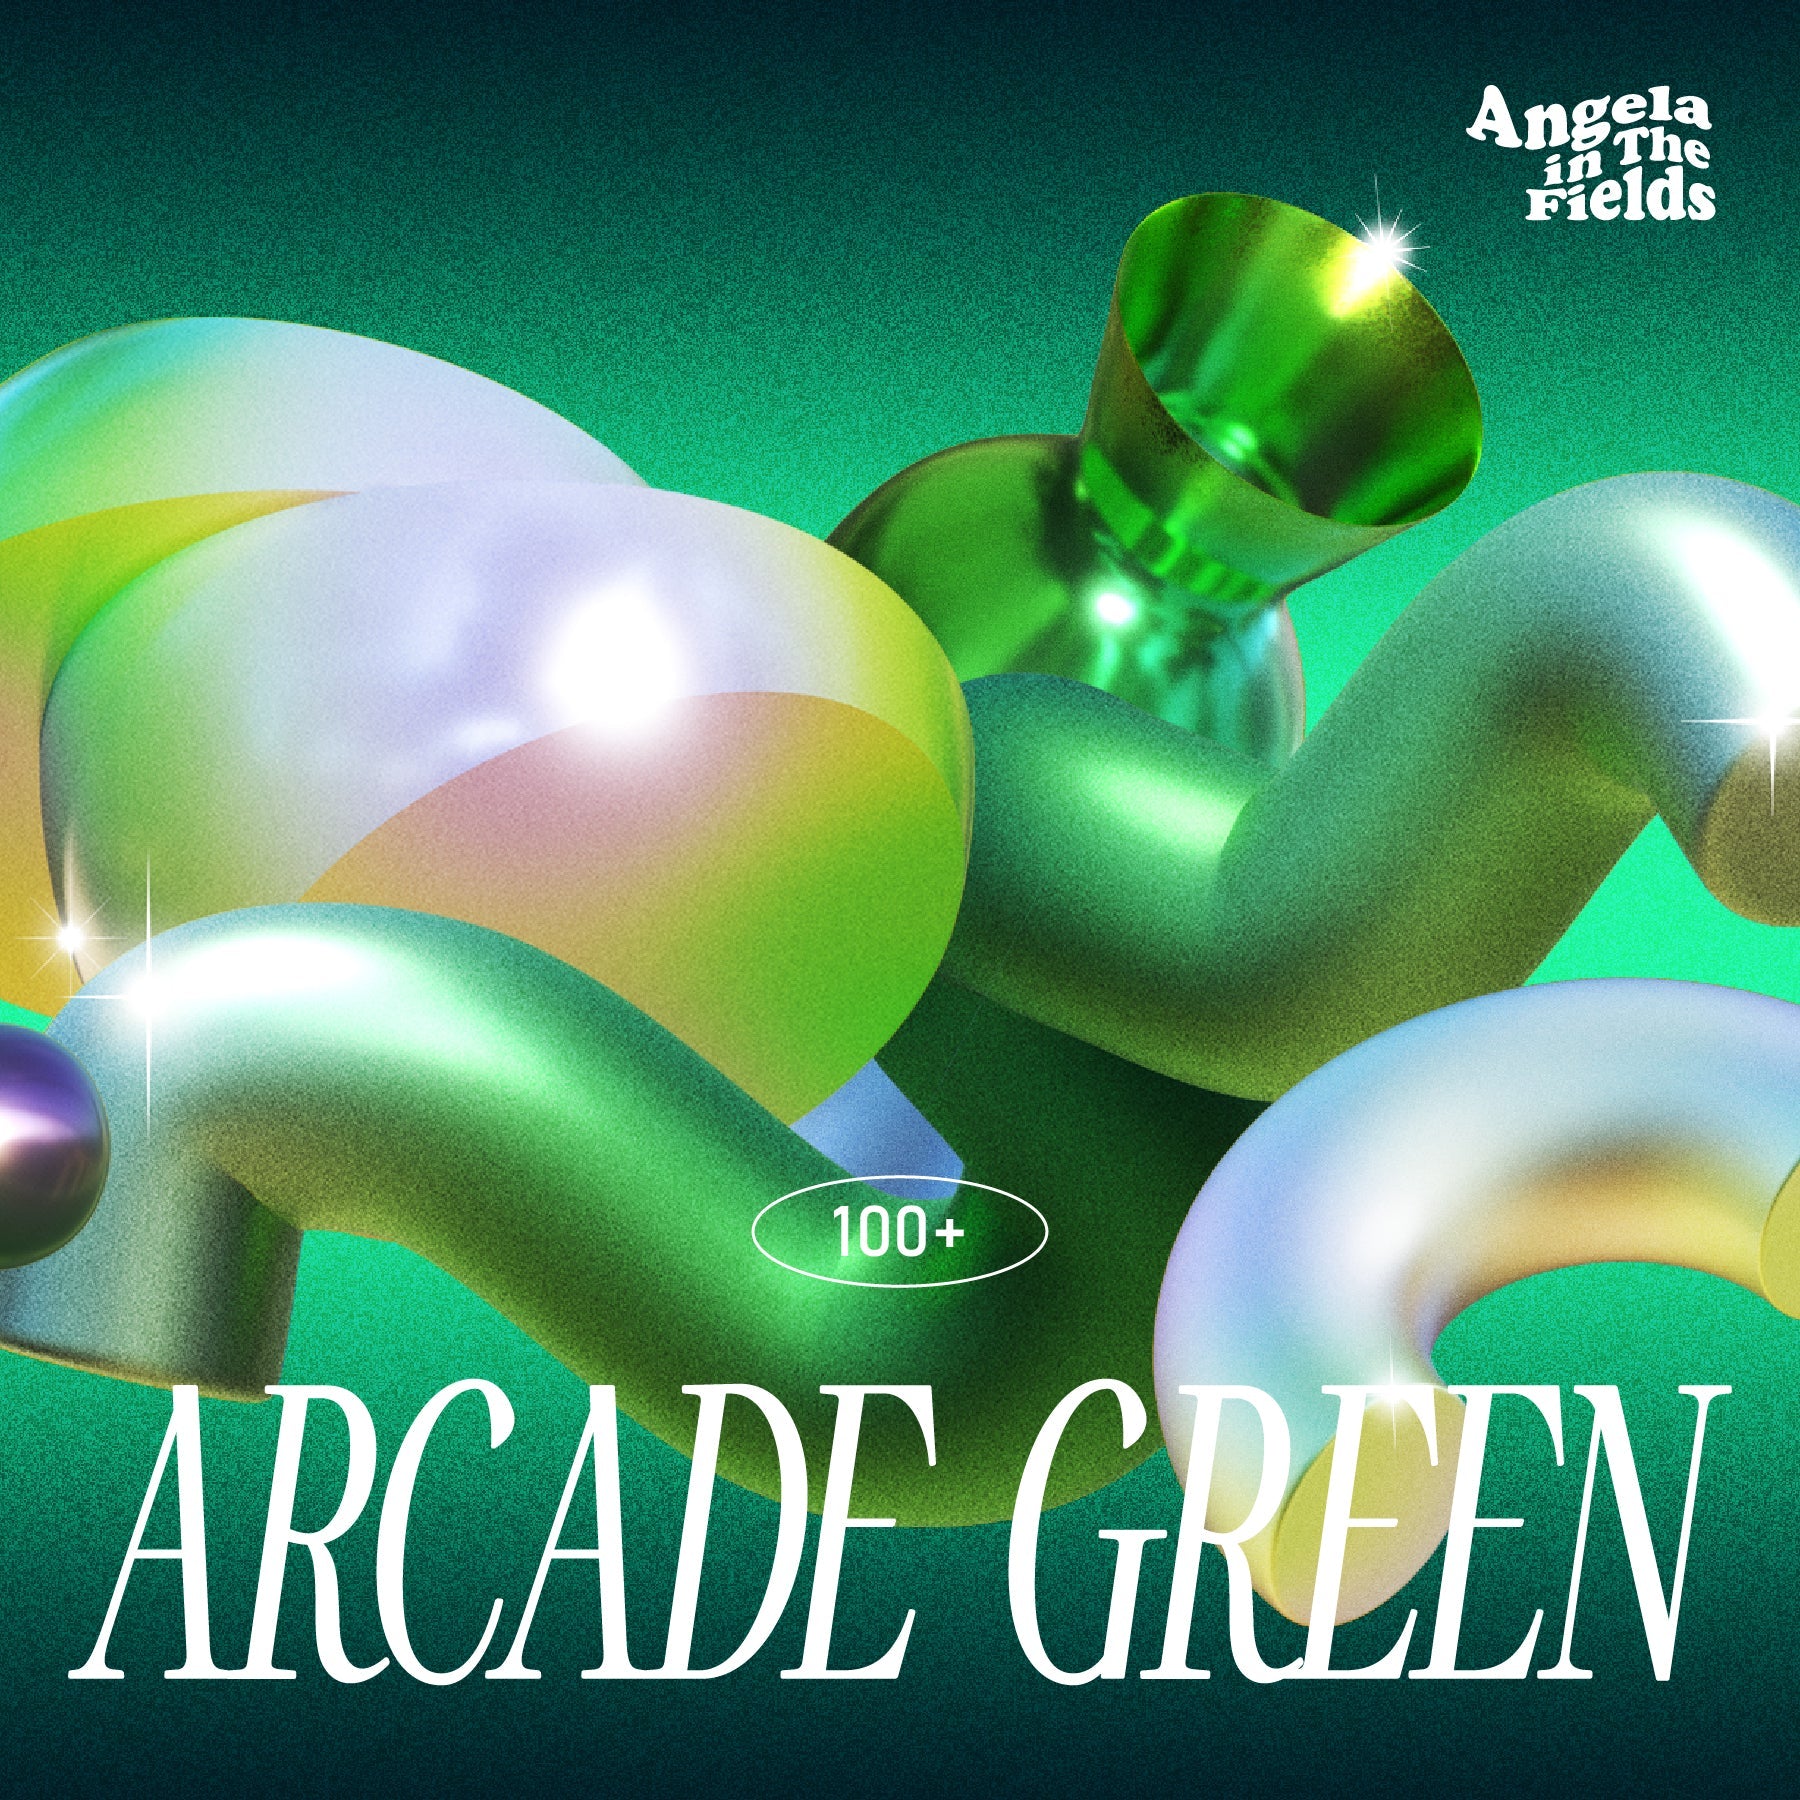 3D ARCADE GREEN Objects